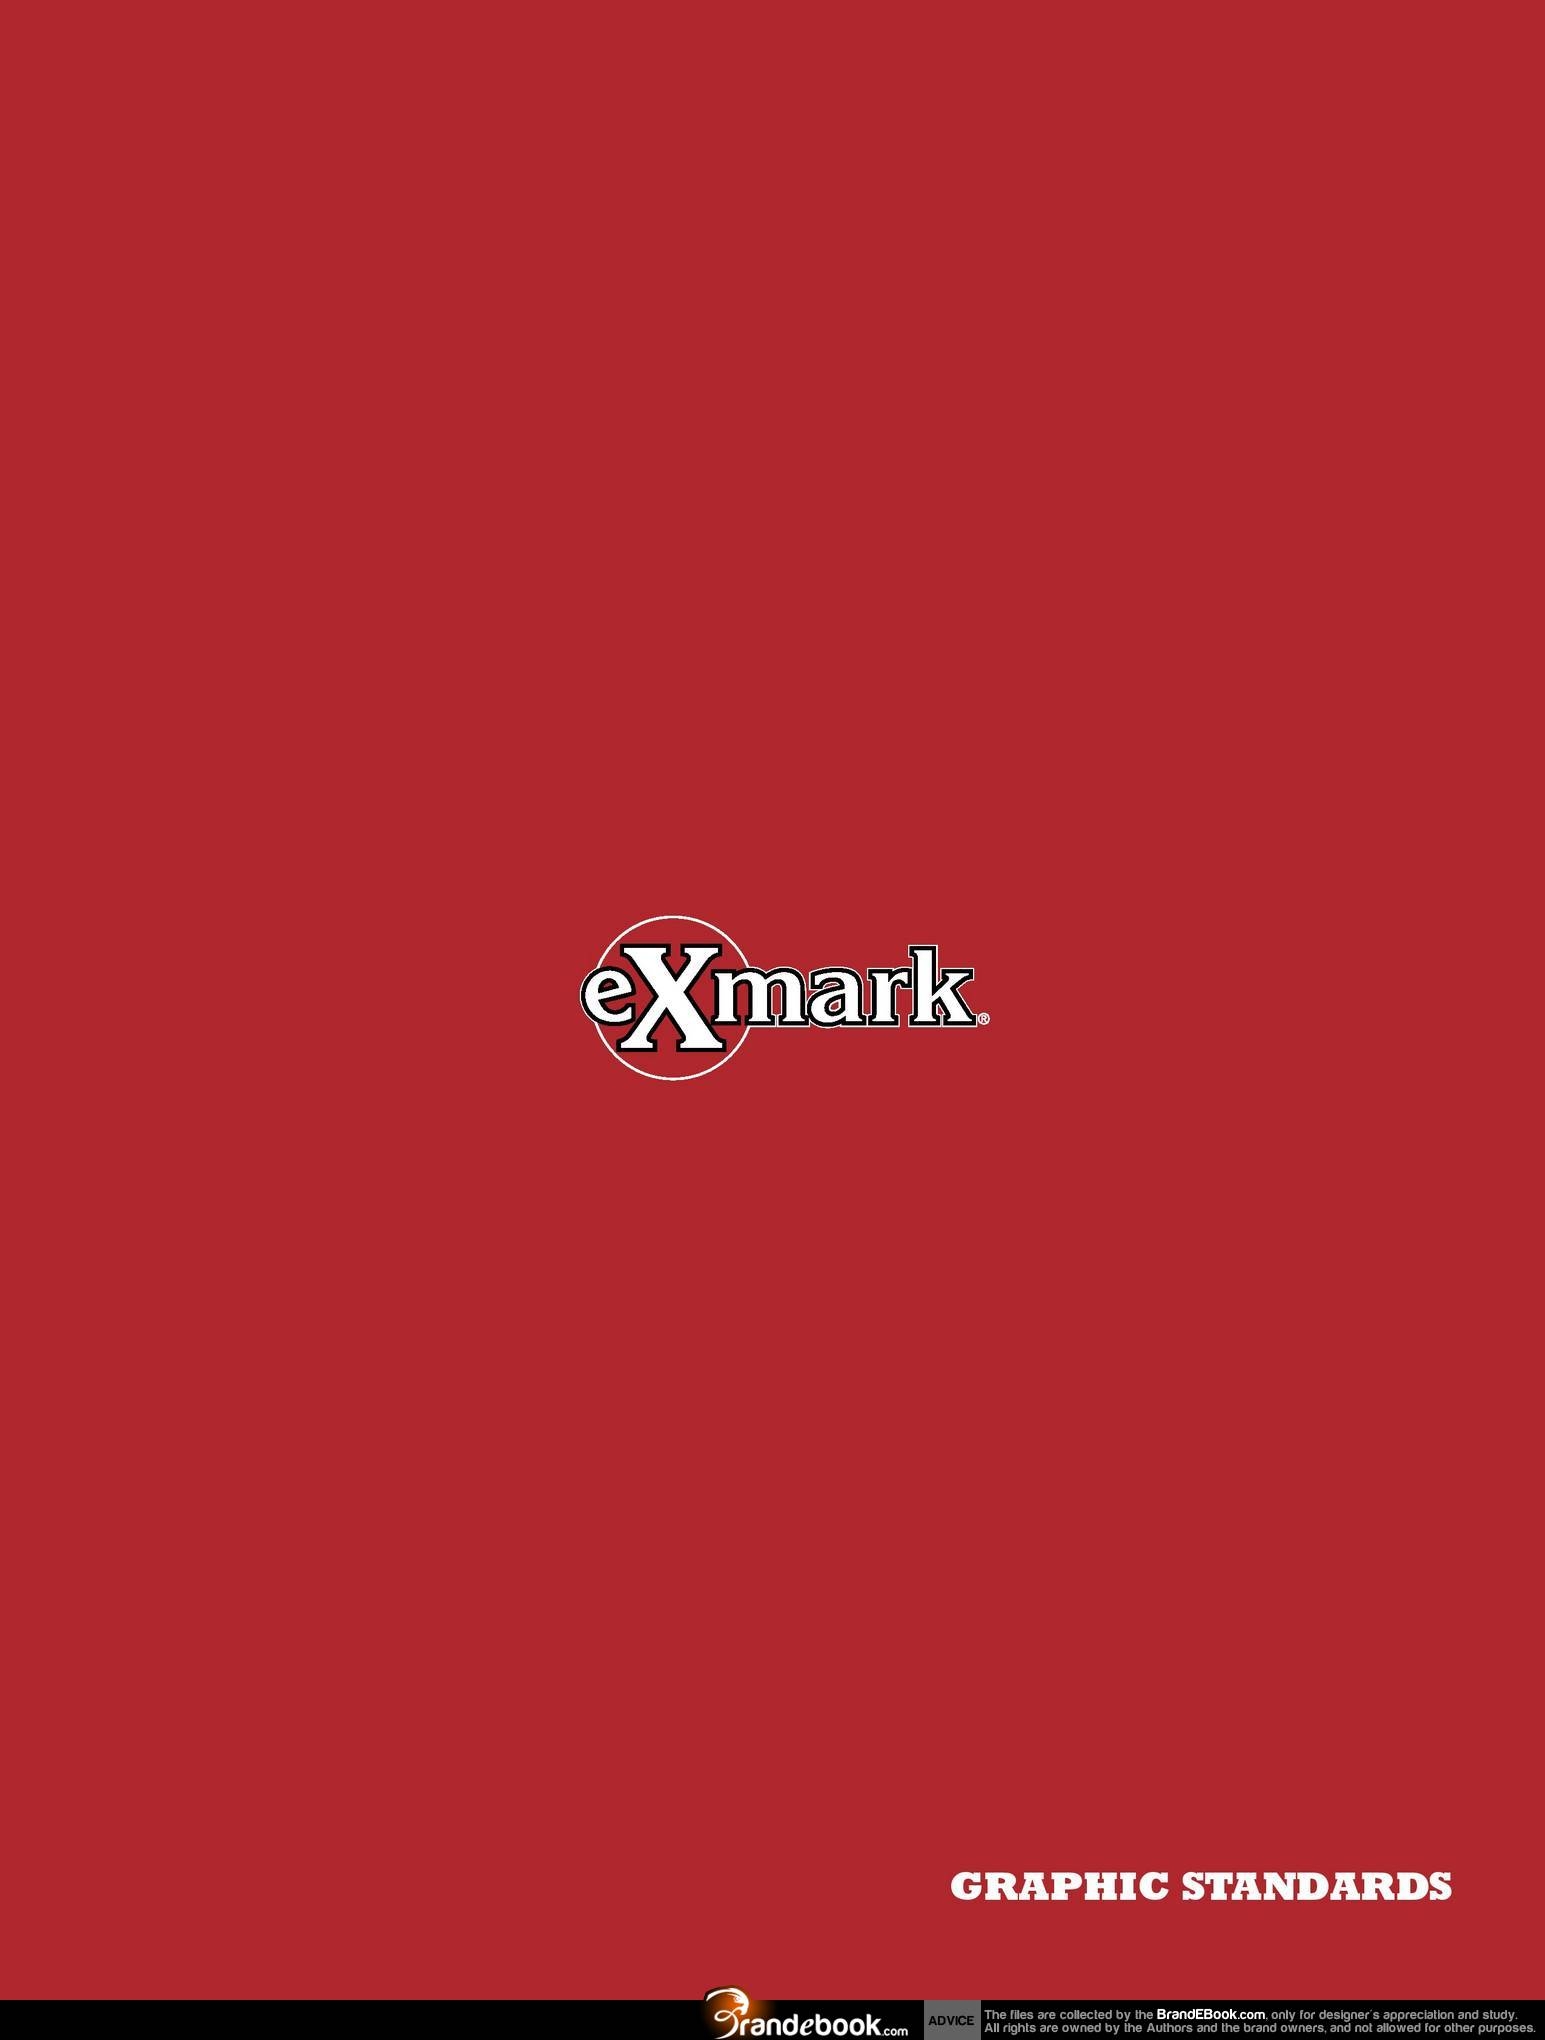 Exmark Brand Graphic Standards